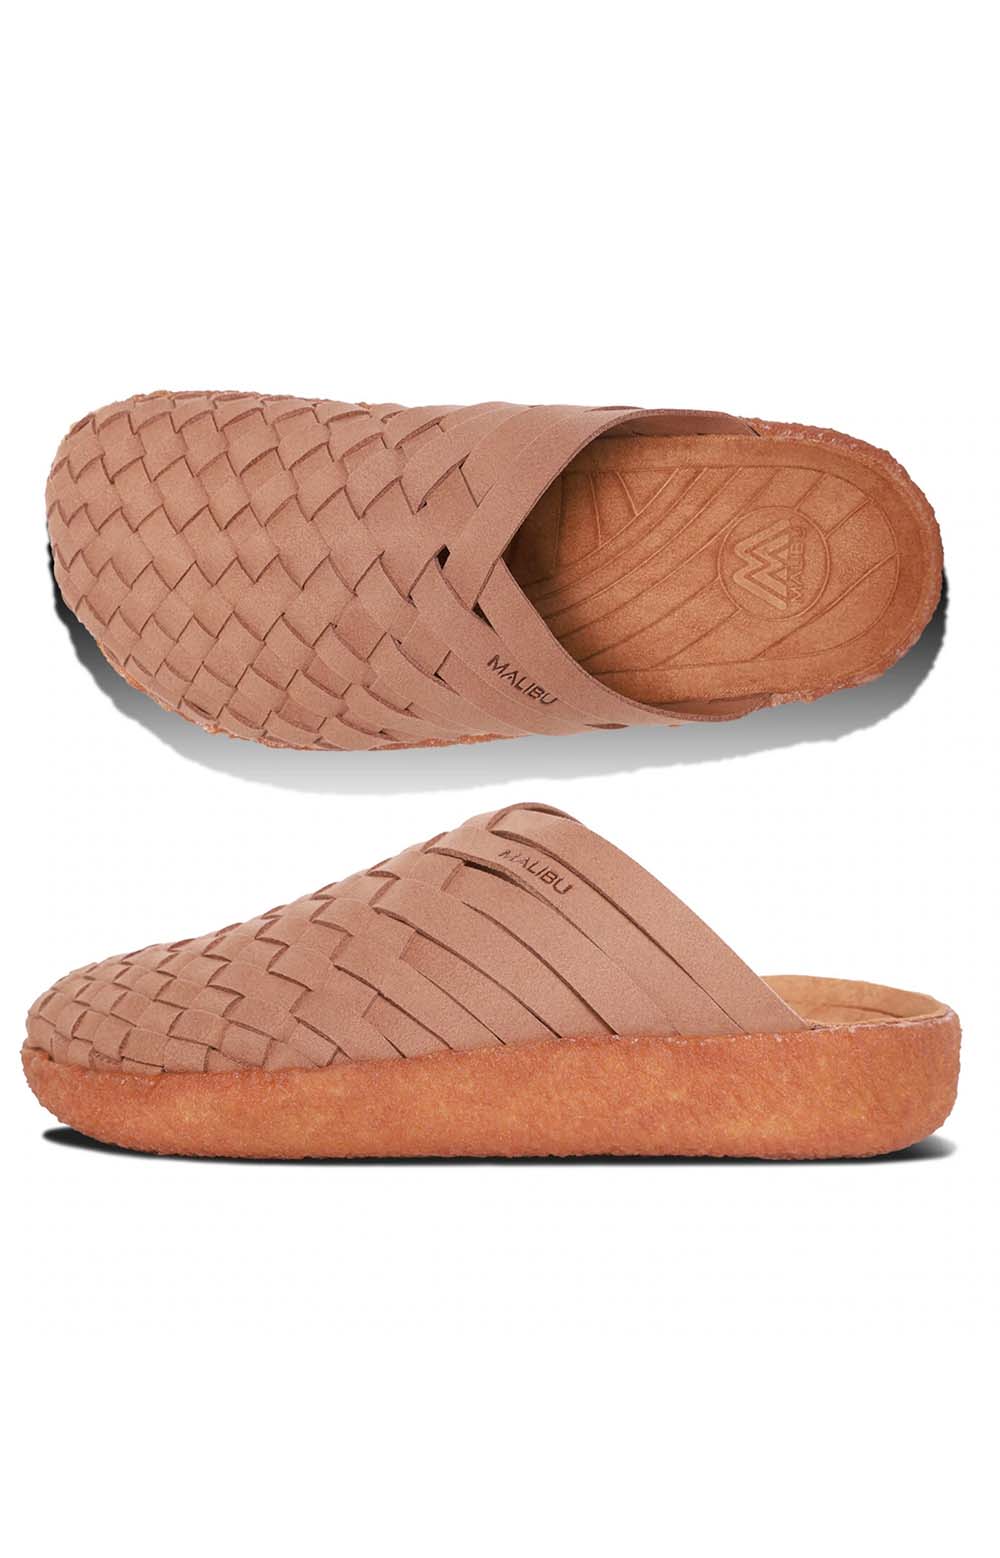 Malibu Sandals Women's, Colony Suede Vegan Leather Shoes - Walnut